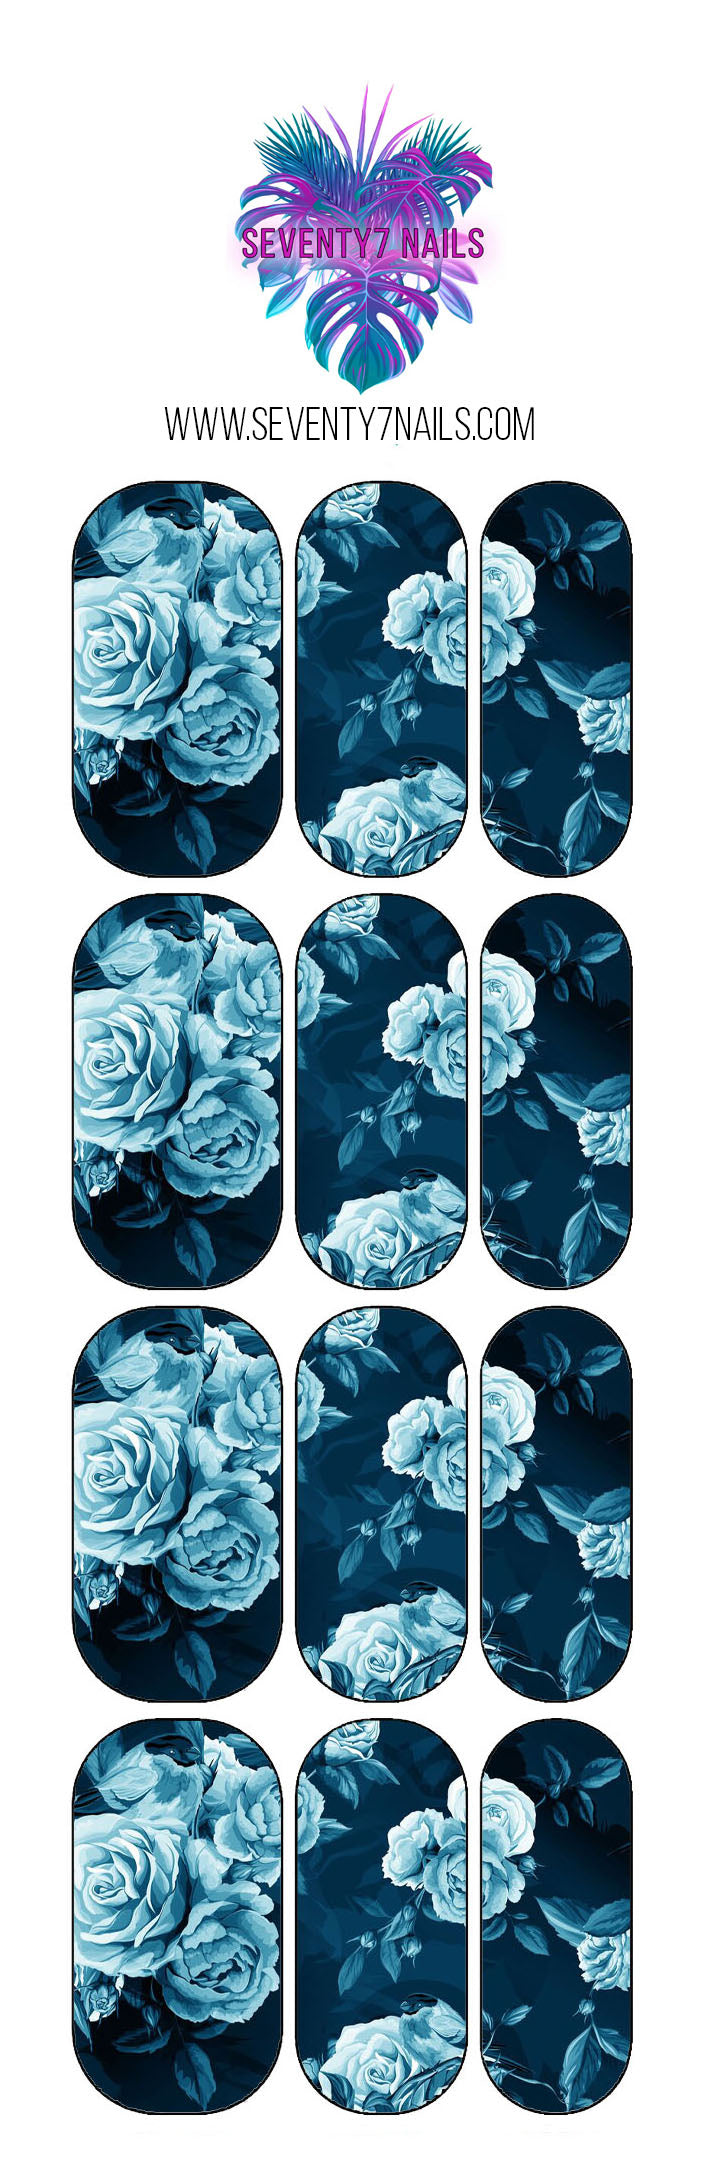 Waterslide Nail Decals - Blue Rose Floral